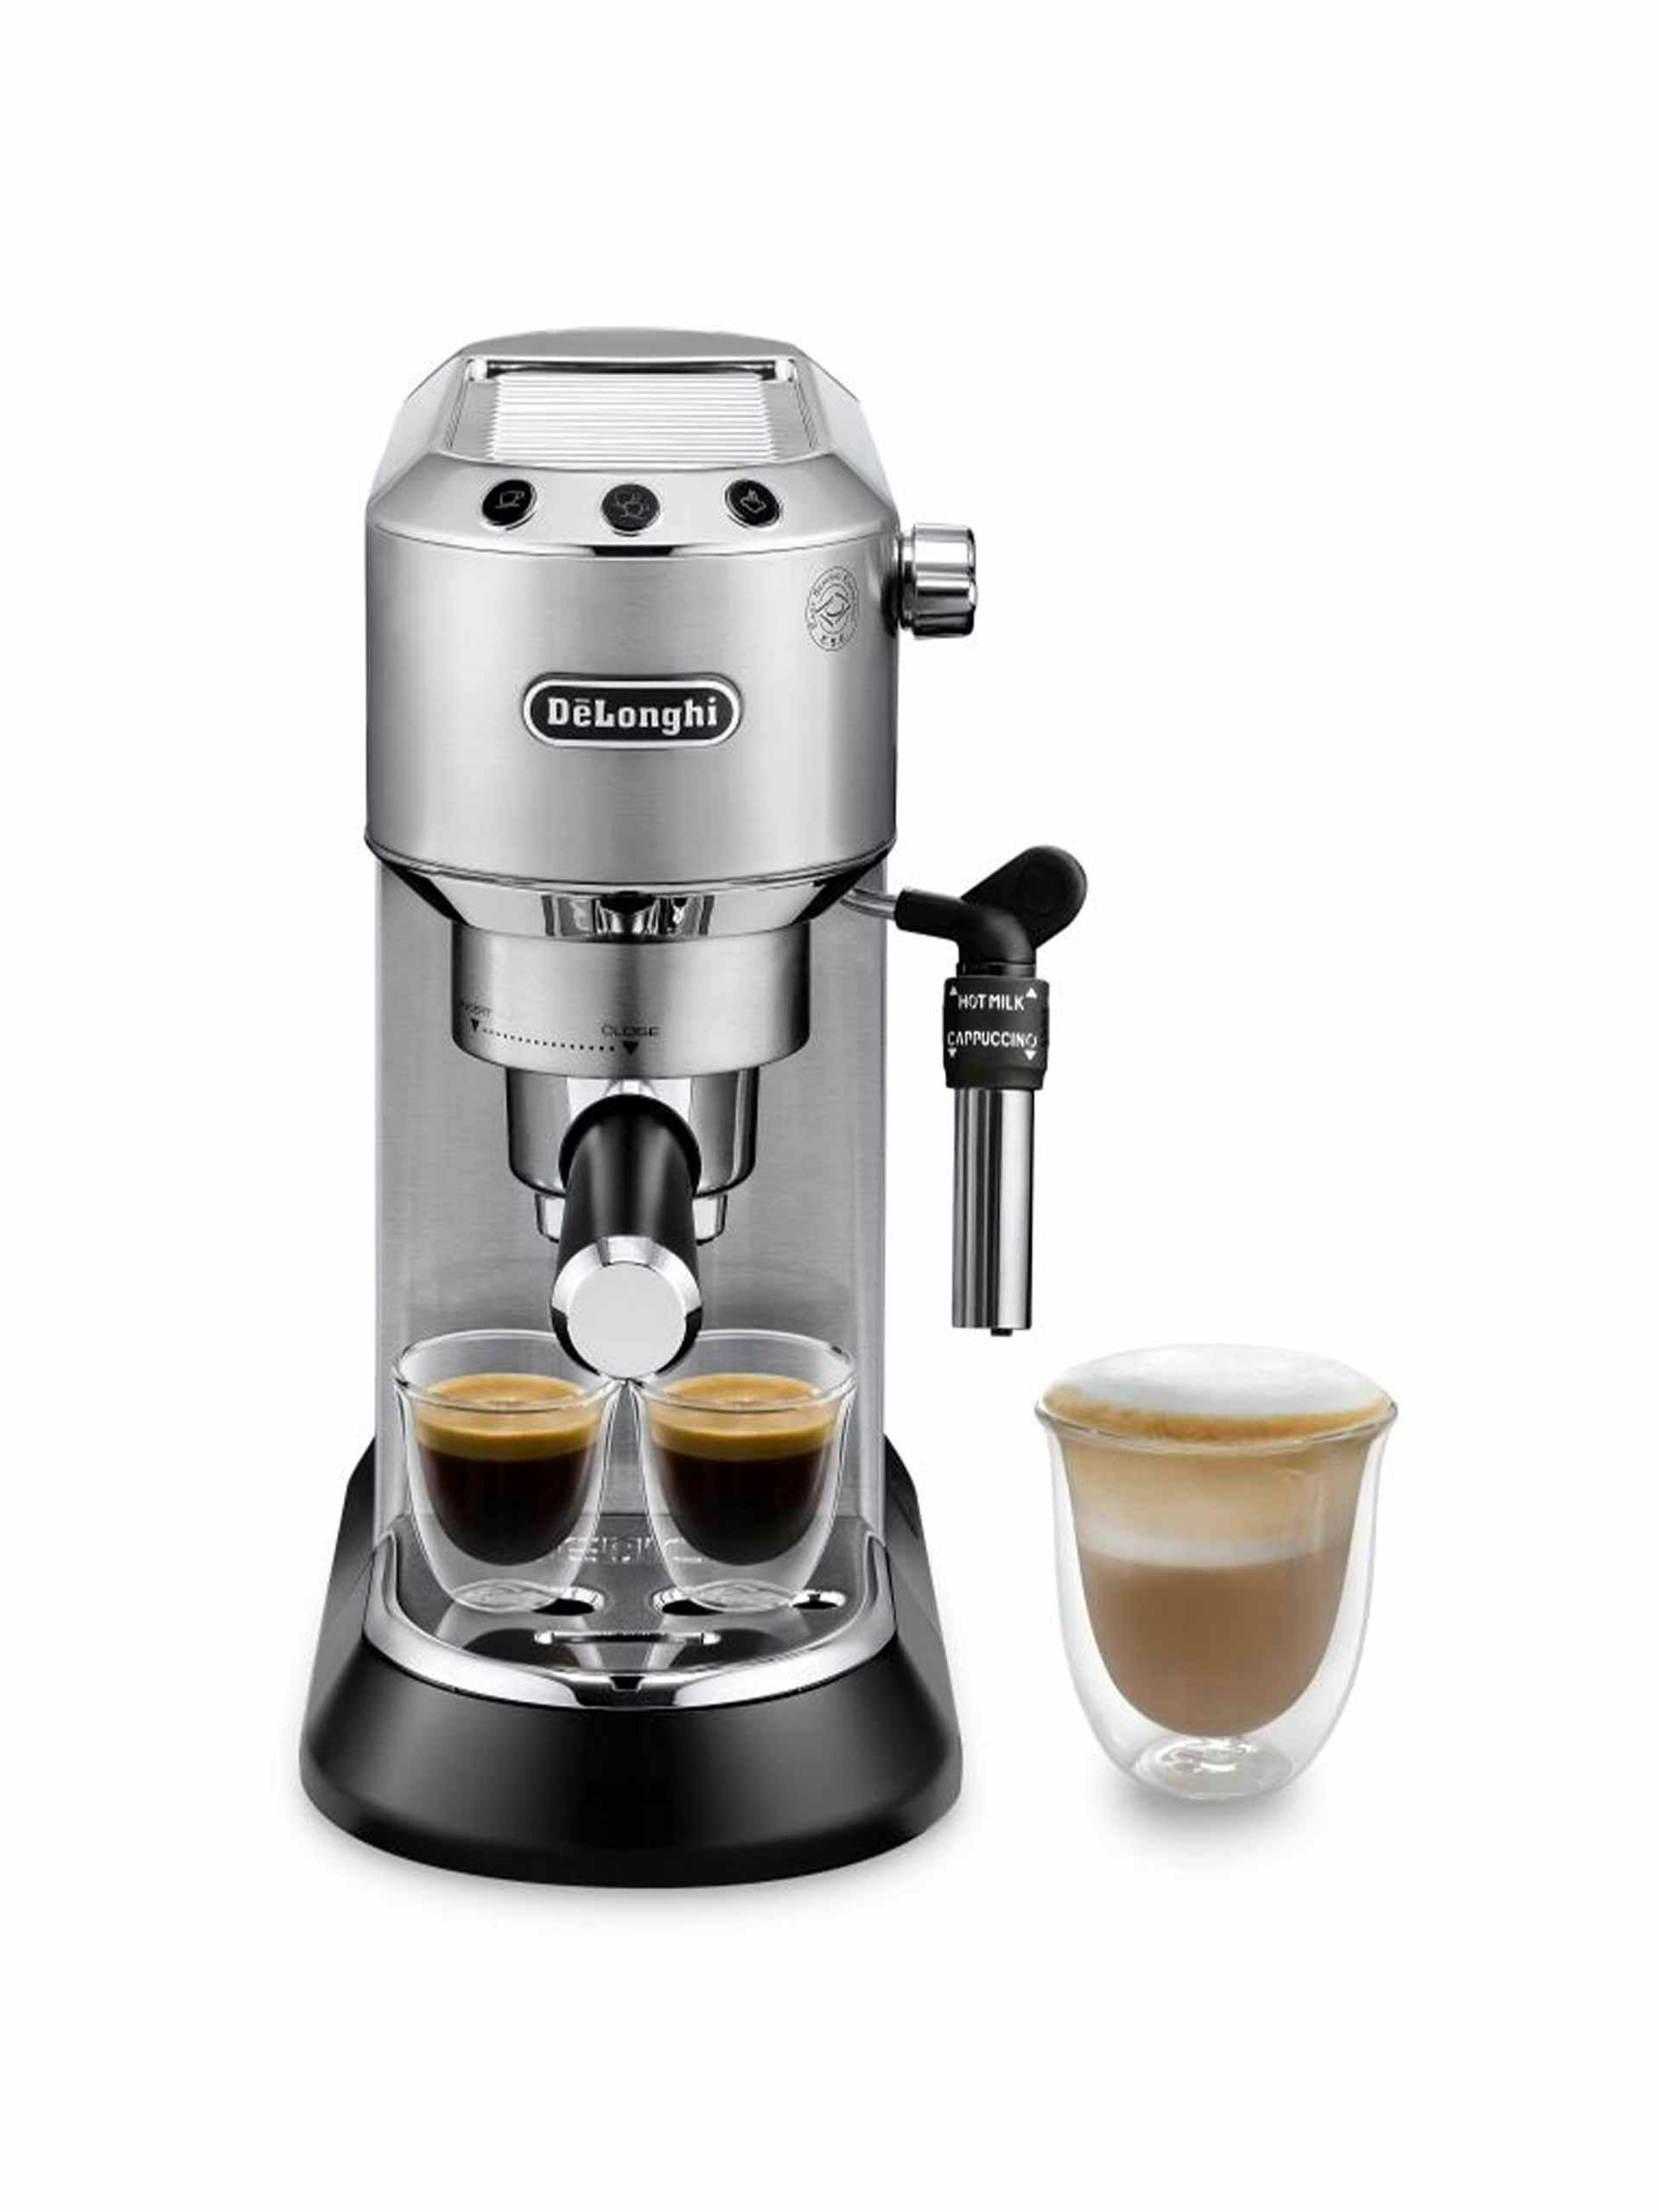 Pump espresso coffee machine